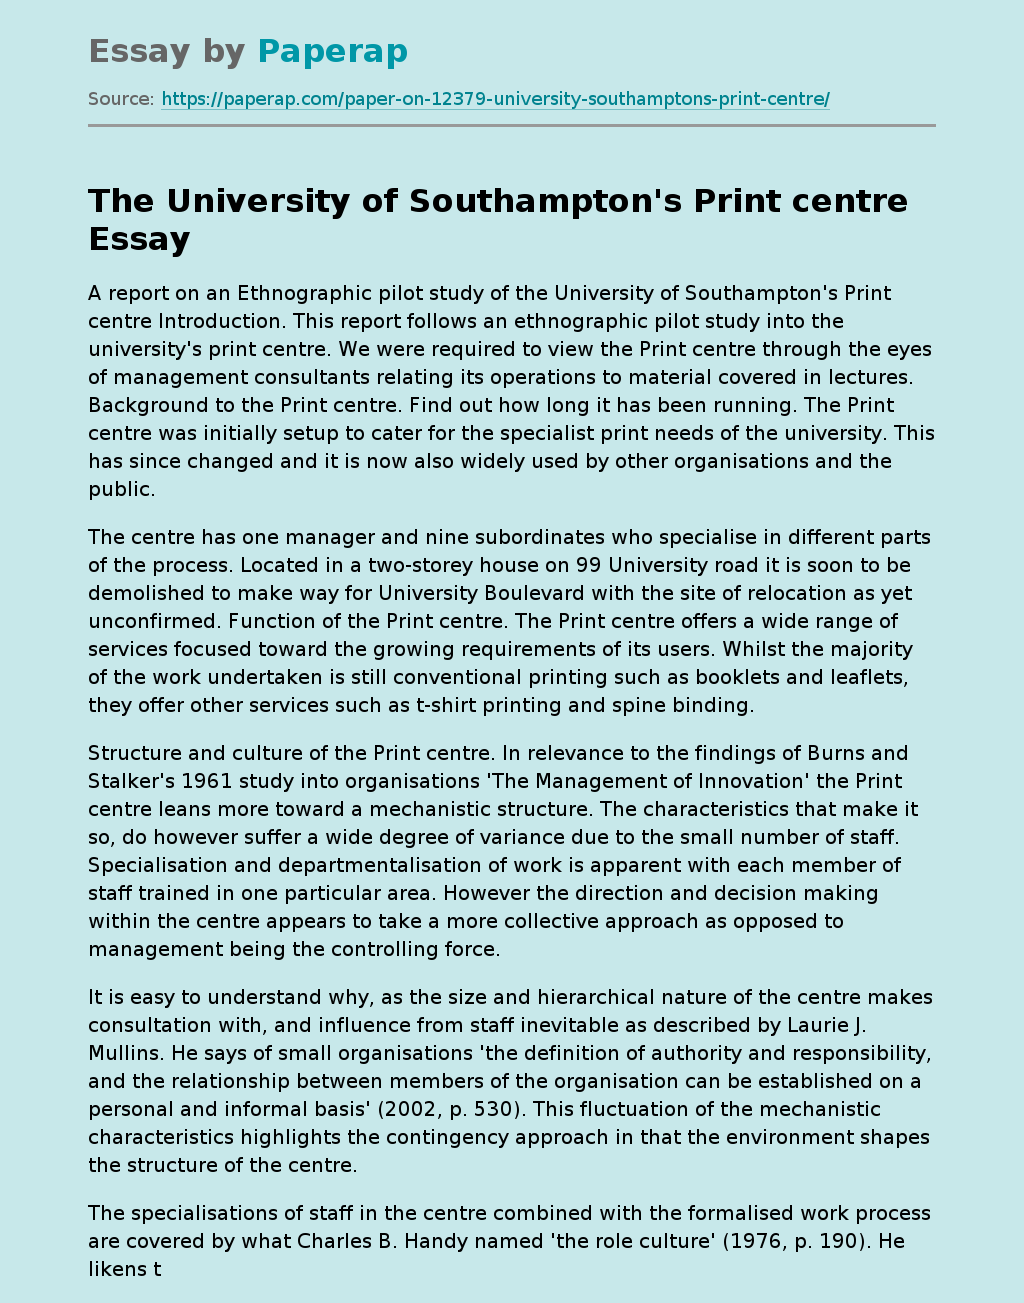 Ethnographic Pilot Study of the University of Southampton’s Print Centre